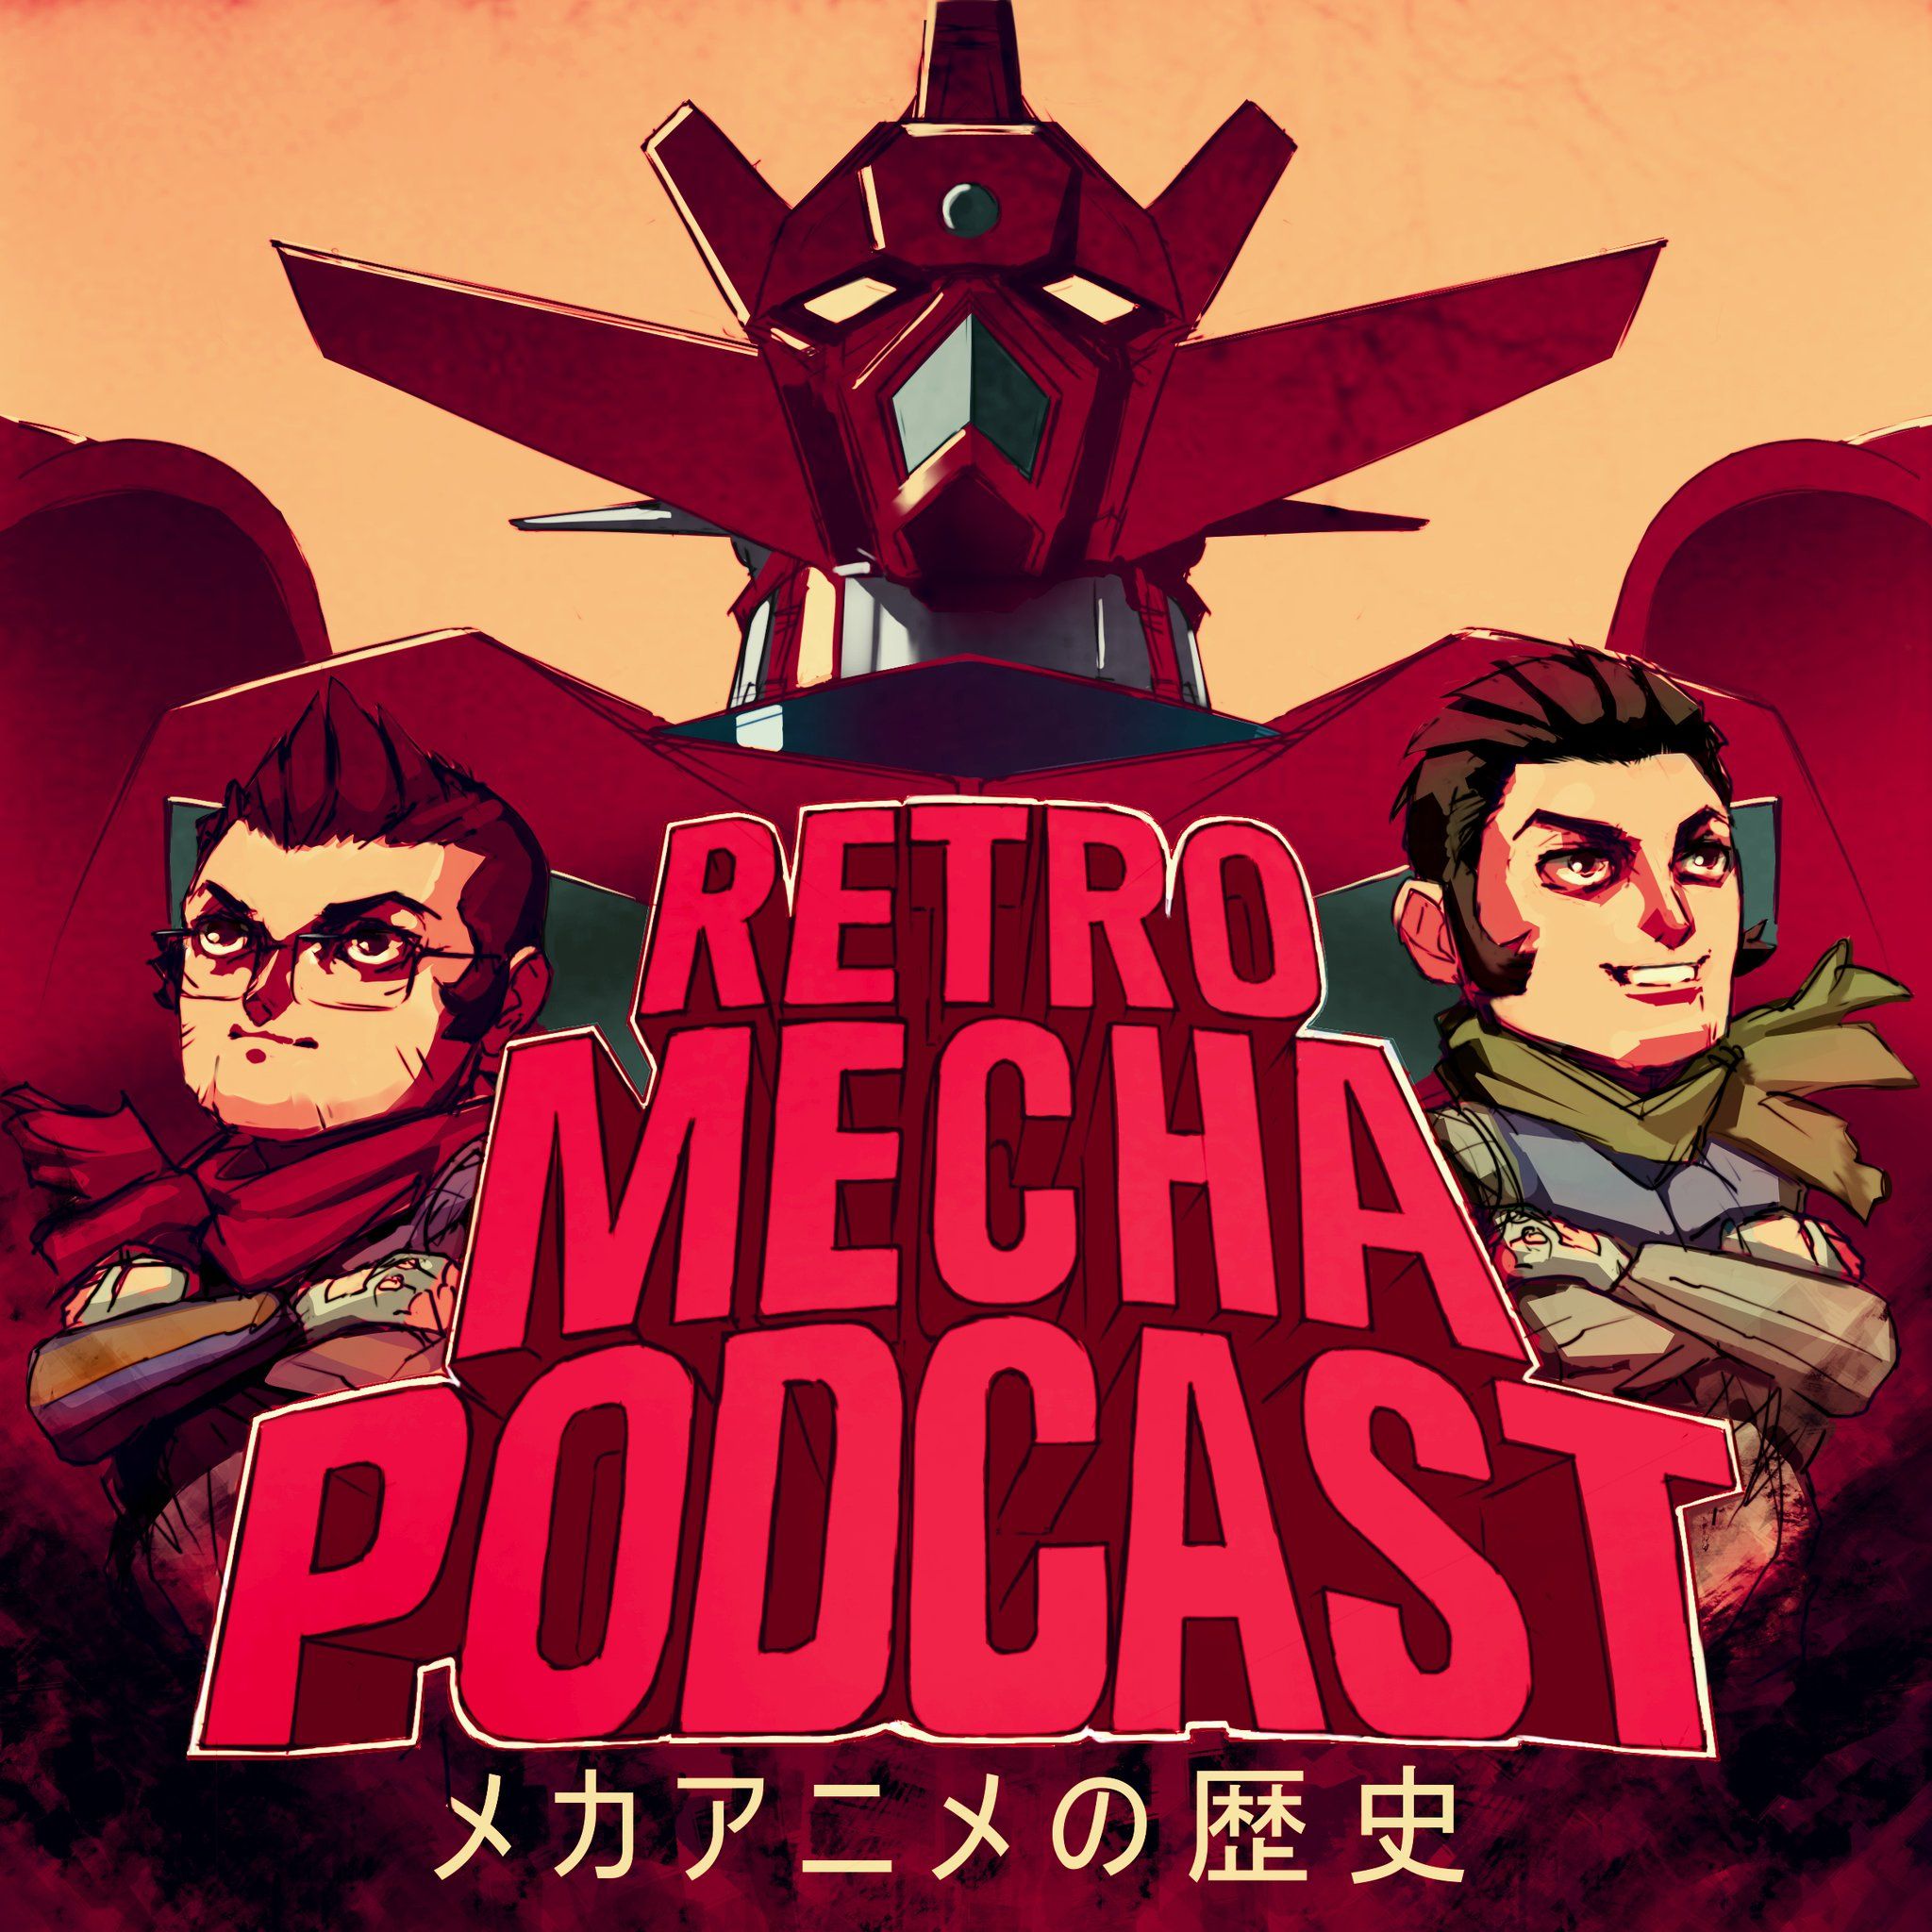 Retro Mecha Podcast